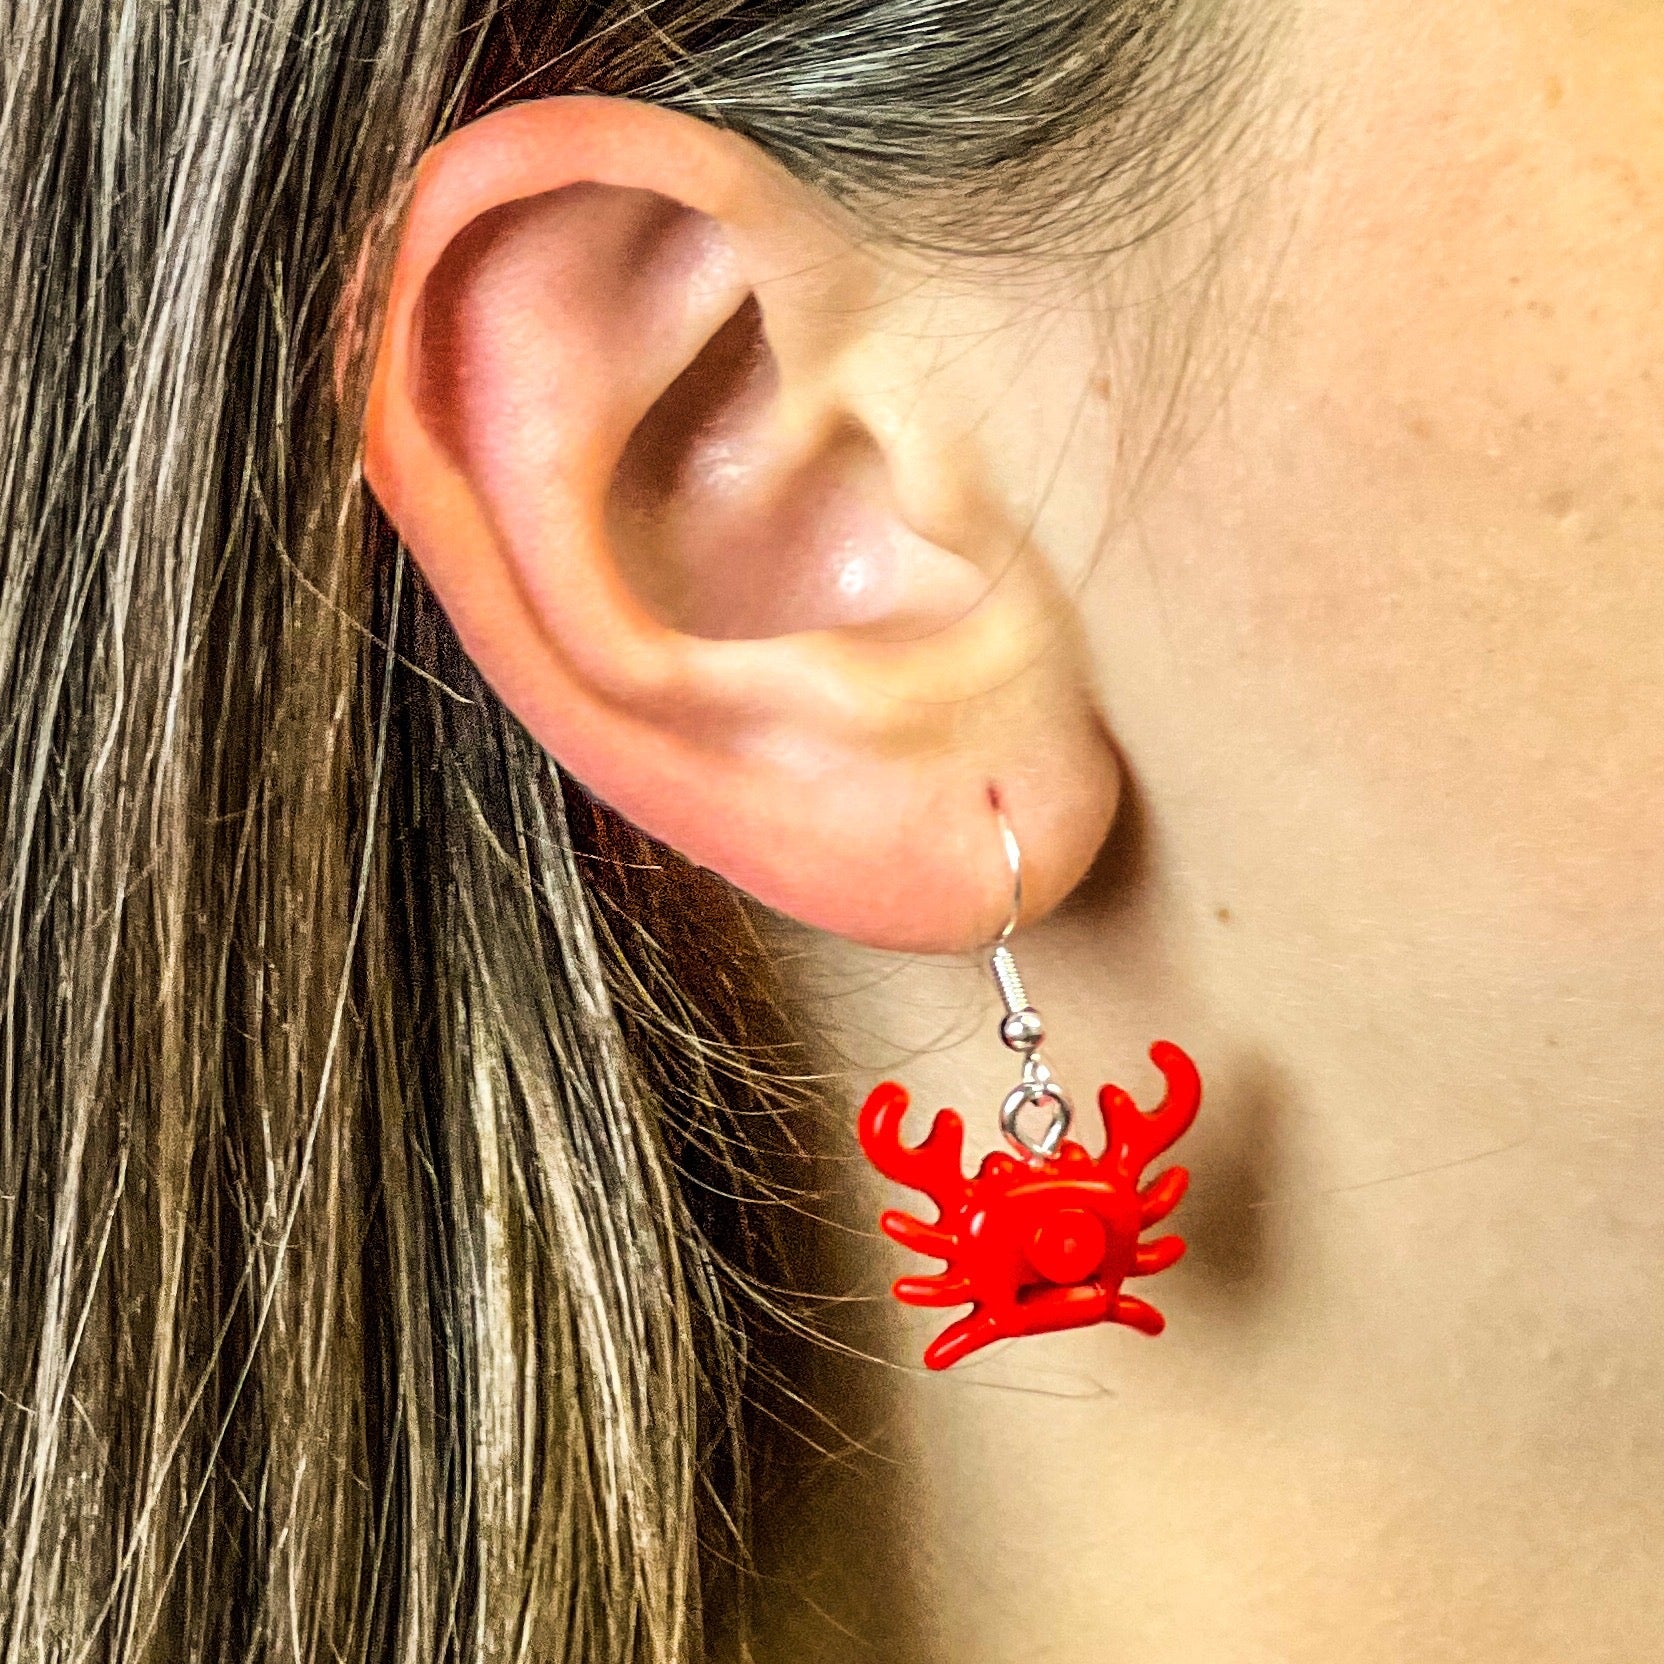 B3 Customs® Crab Earrings made from LEGO Bricks